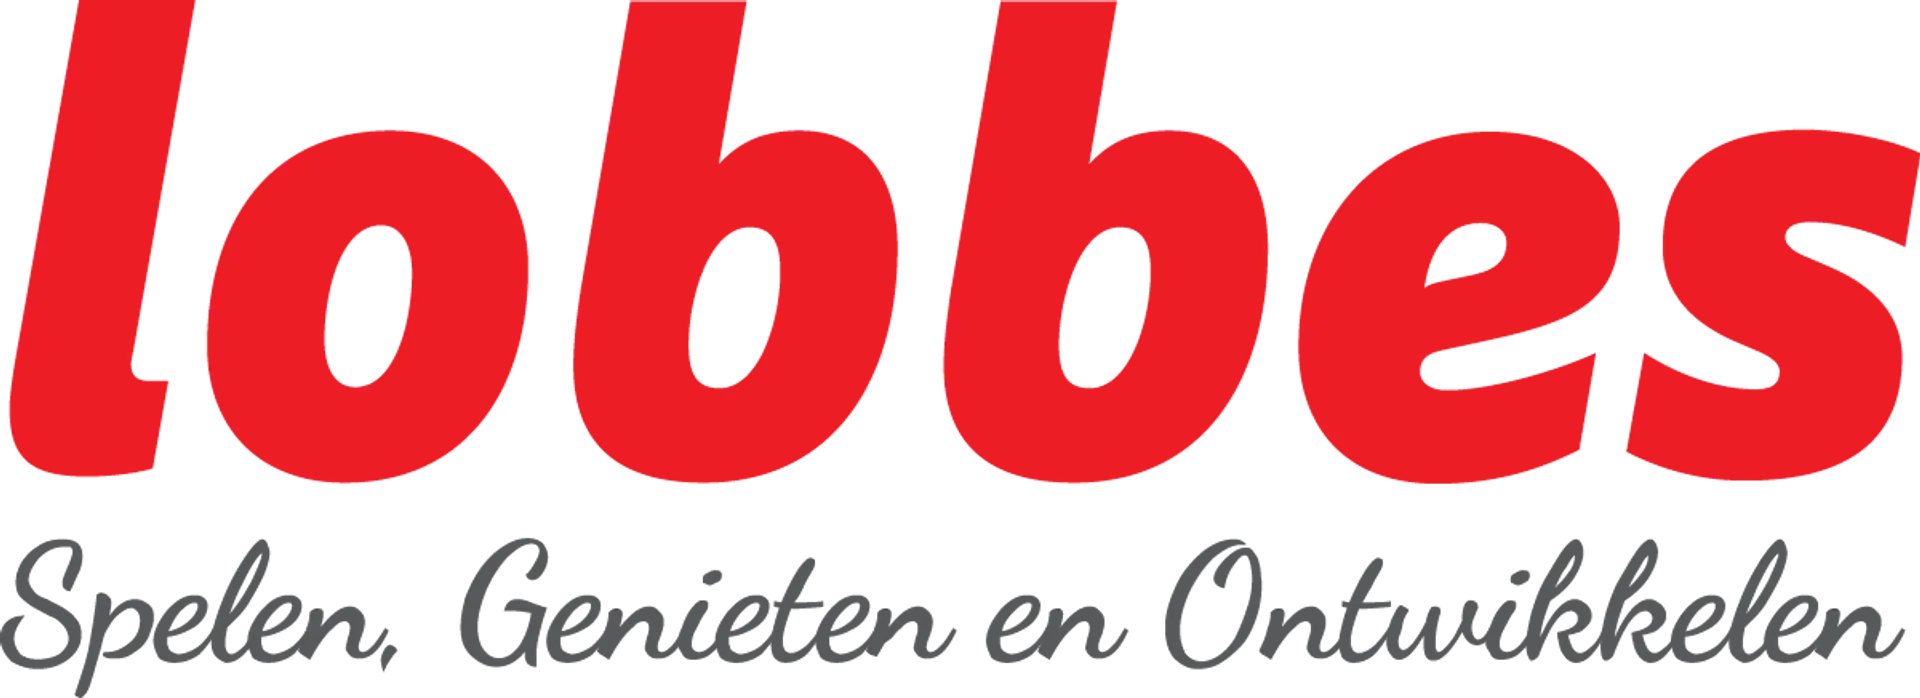 LOBBES logo